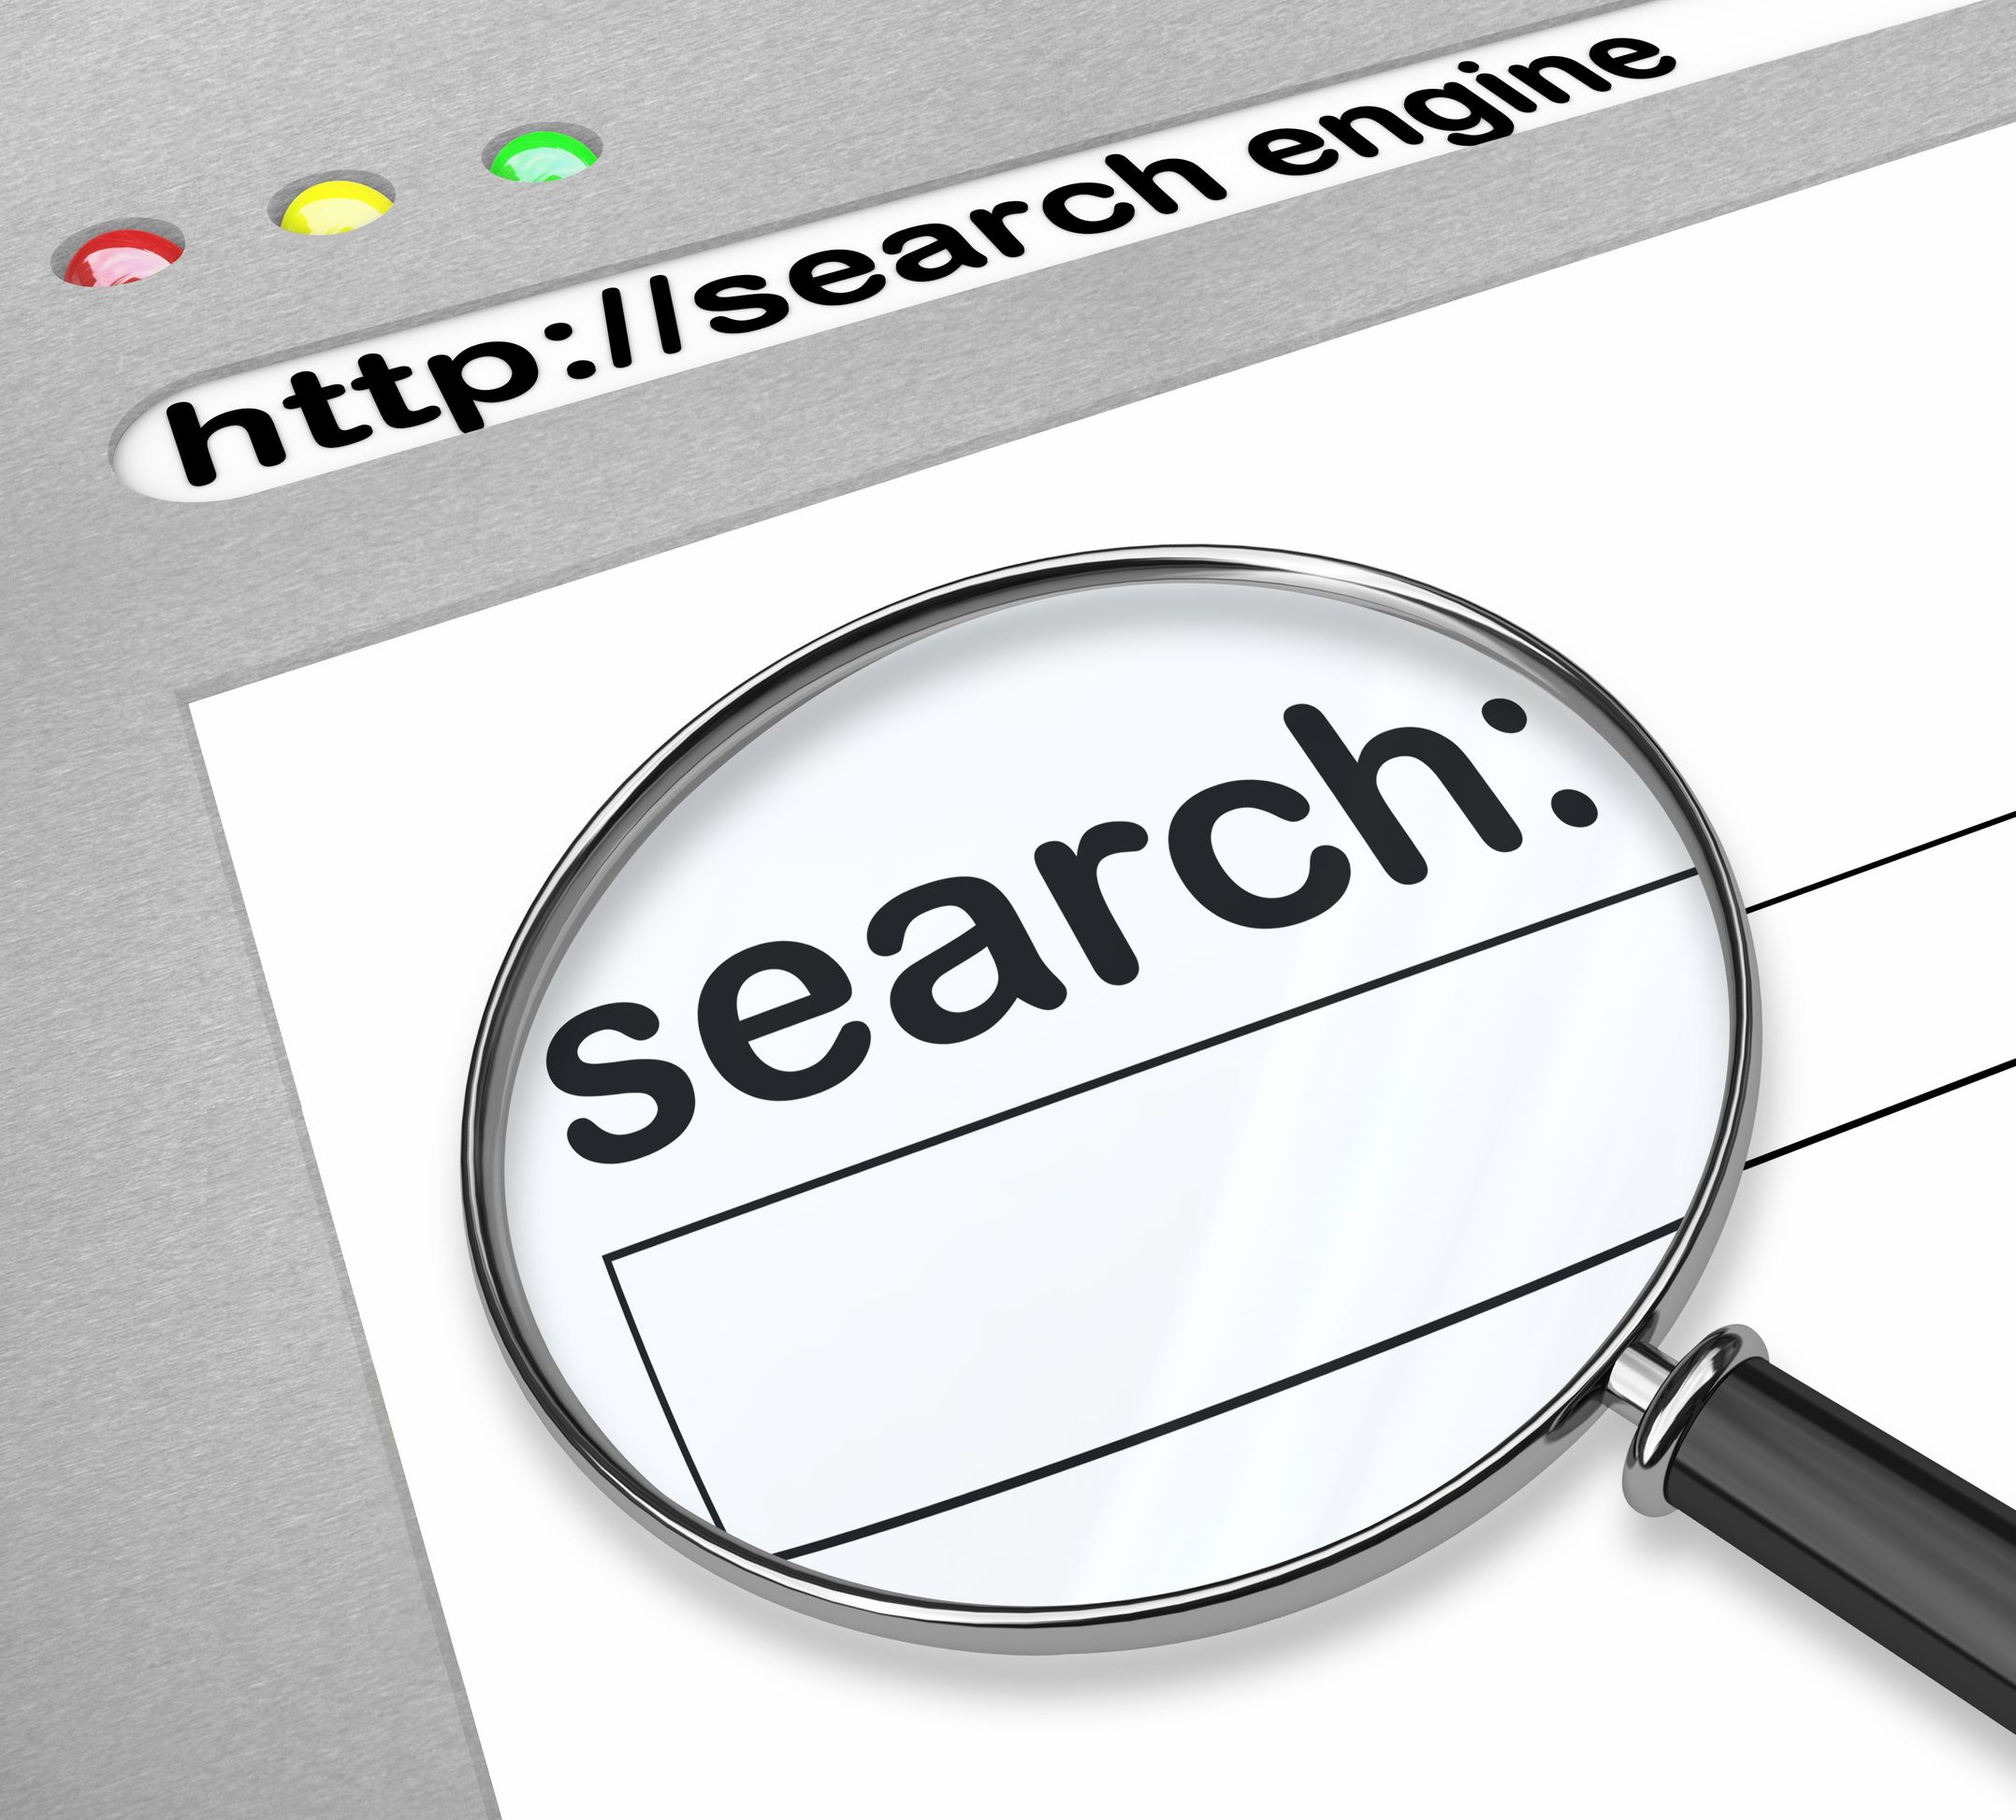 Web search engine